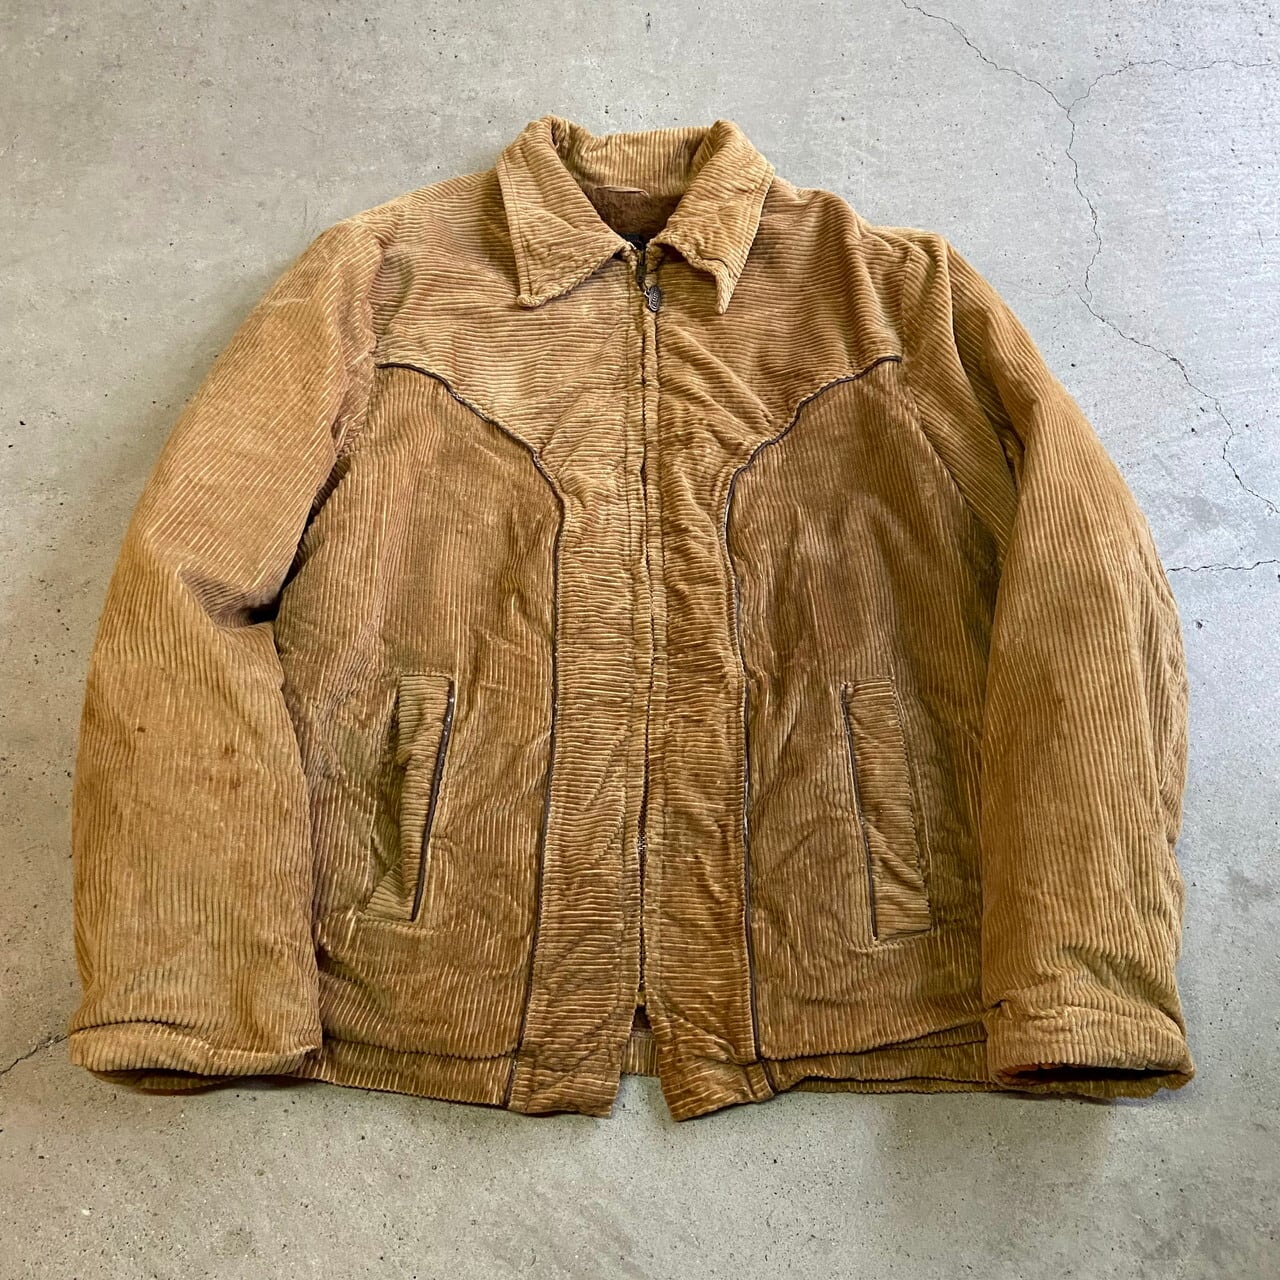 70s vintage   USA製 corduroy jacket L相当